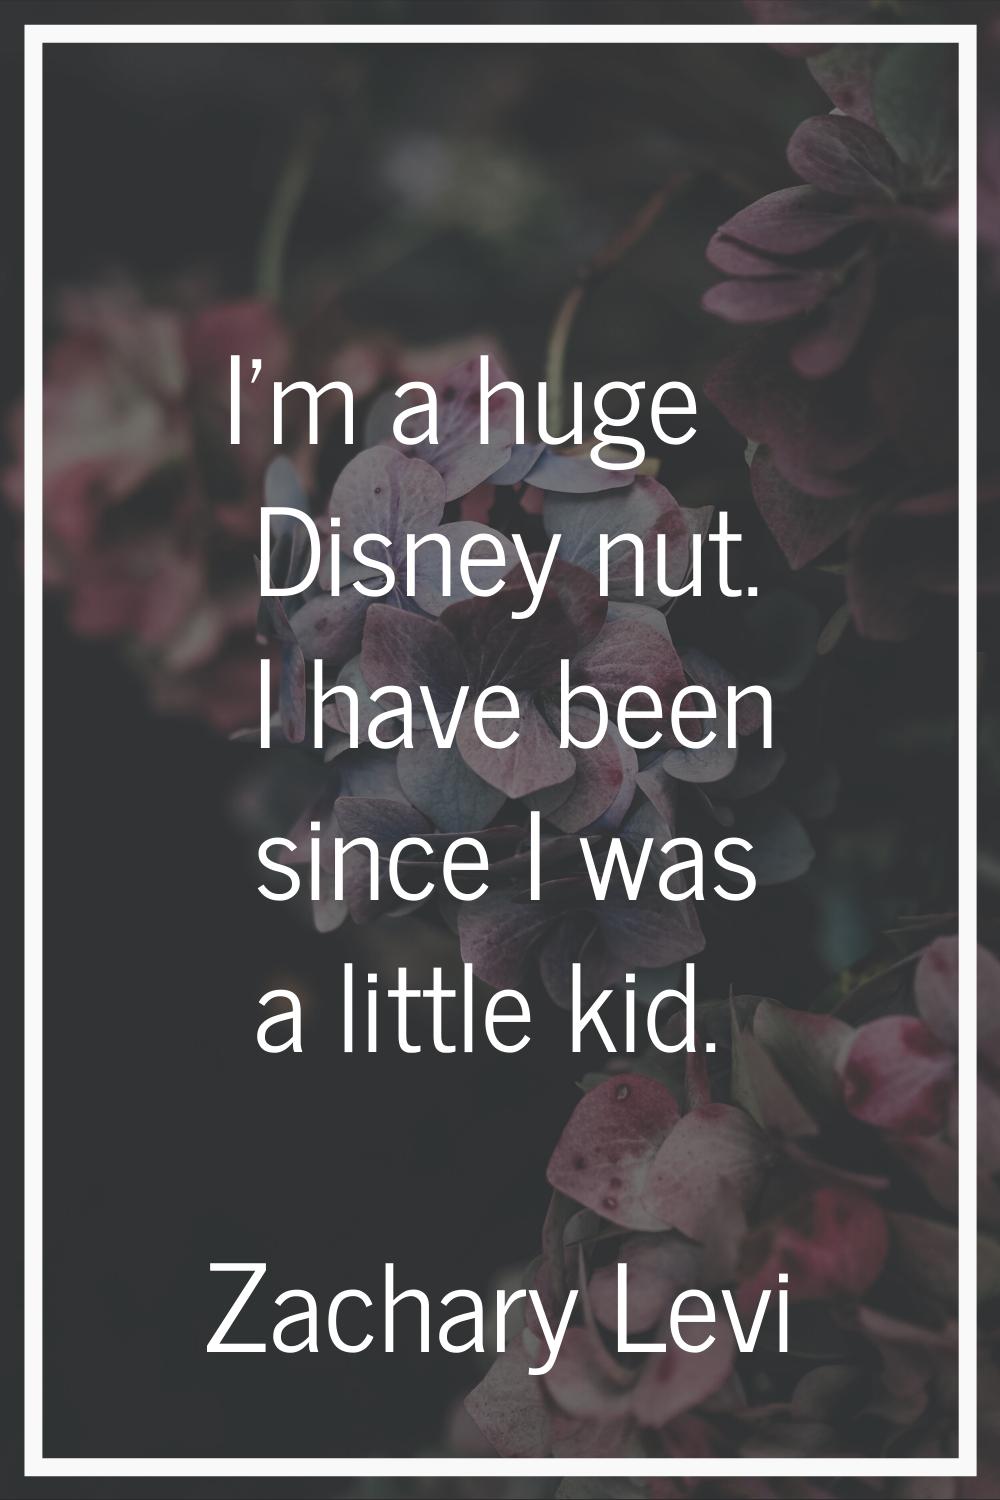 I'm a huge Disney nut. I have been since I was a little kid.